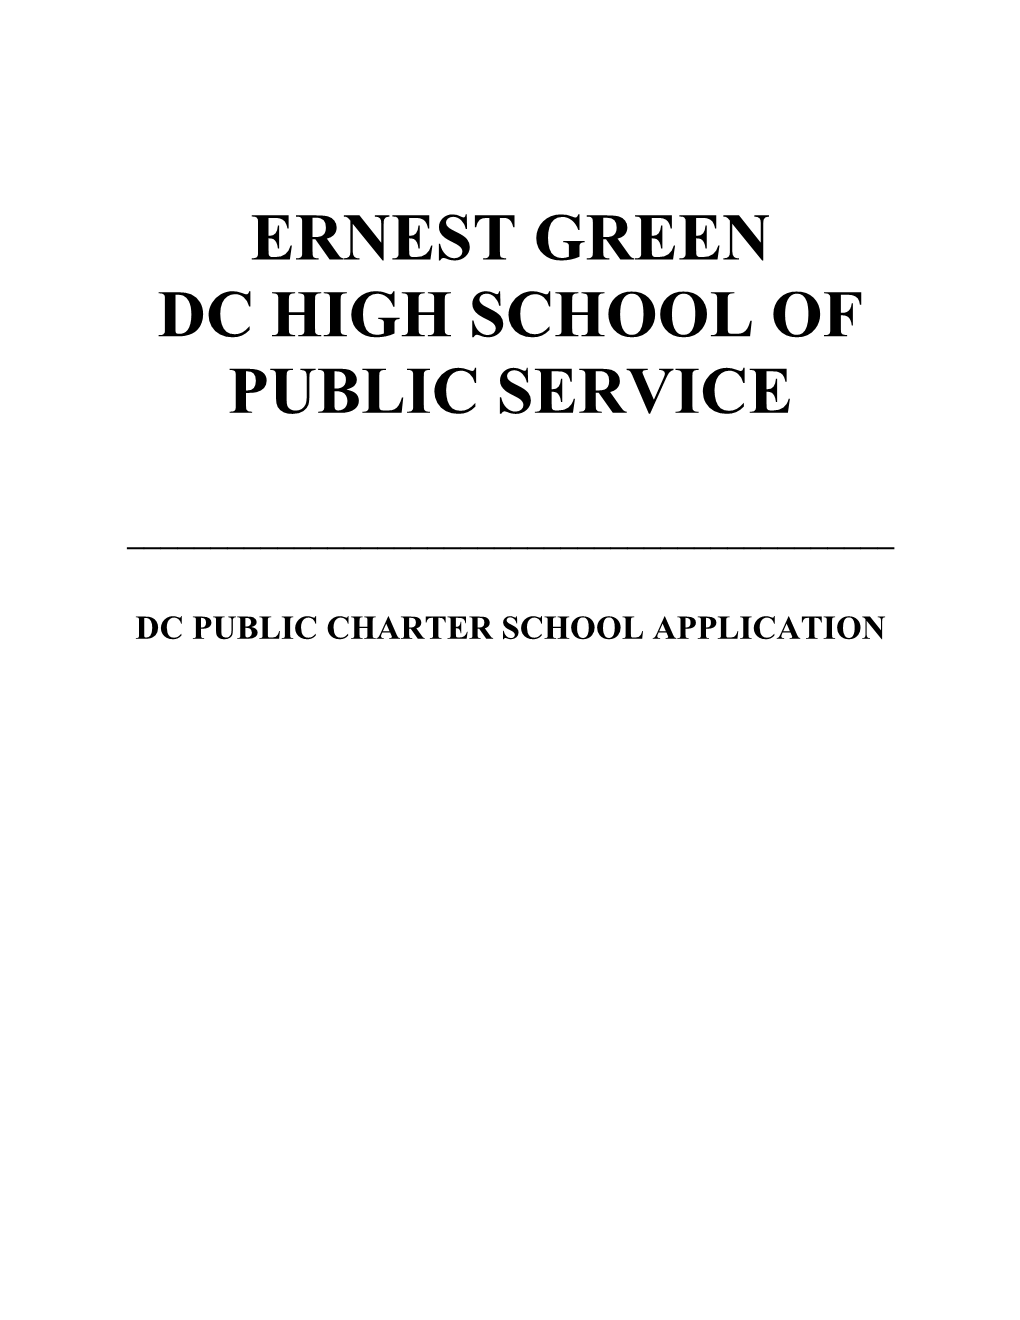 Ernest Green Dc High School of Public Service